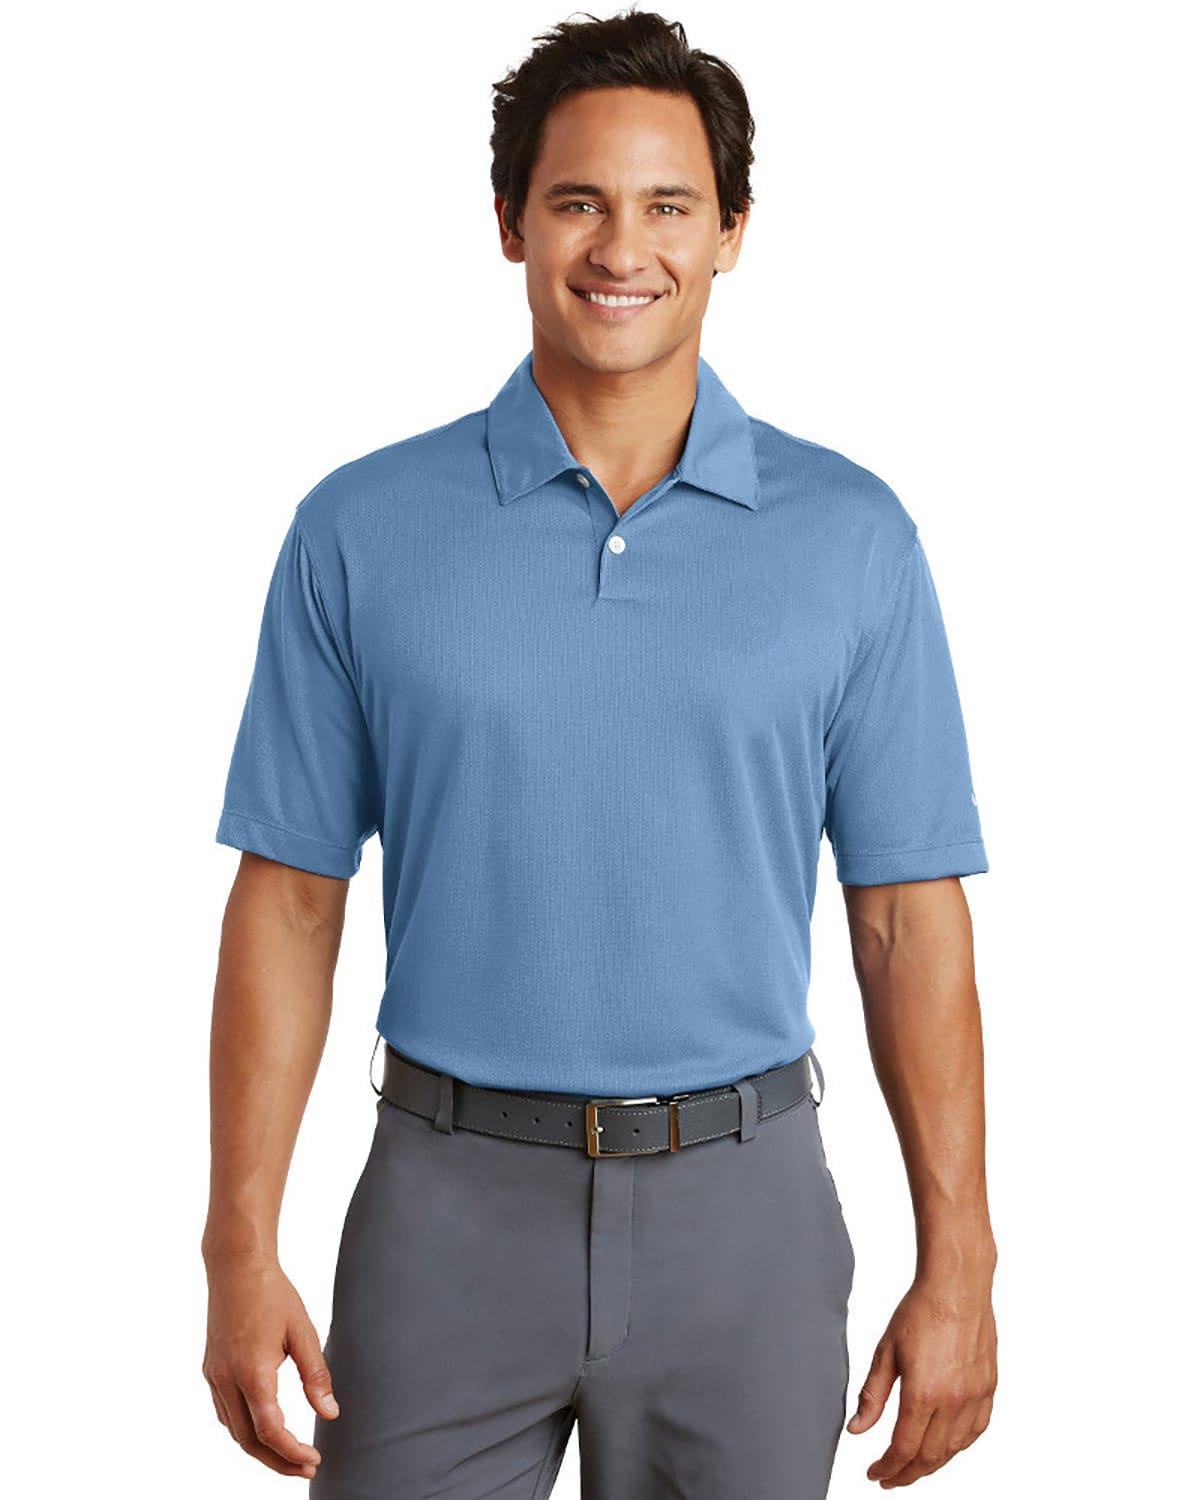 Nike Golf 373749 Mens Dri-Fit Pebble Texture Polo Shirt